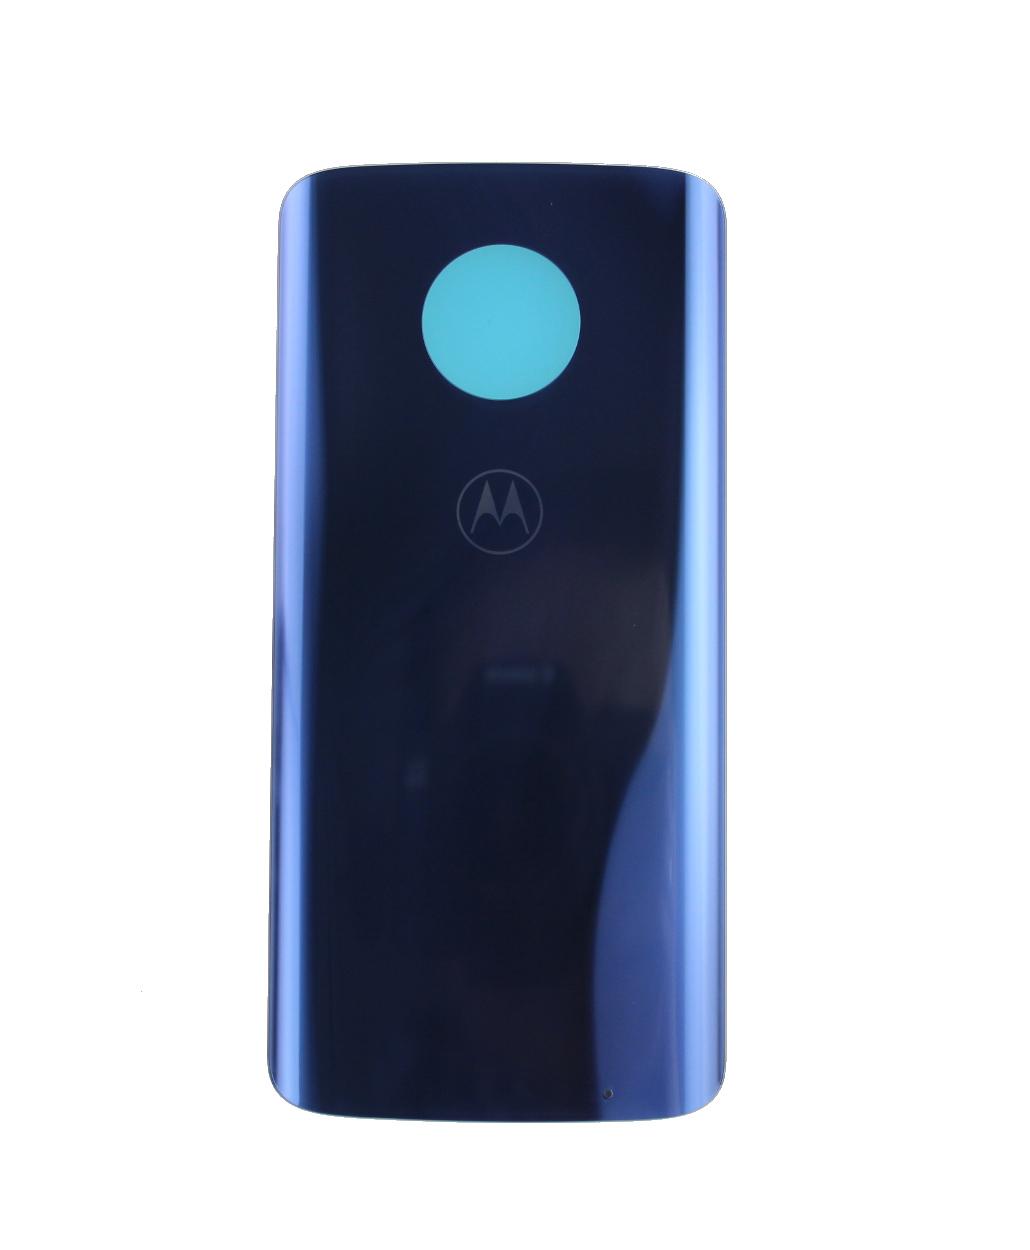 Originál kryt baterie Motorola Moto G6 Plus